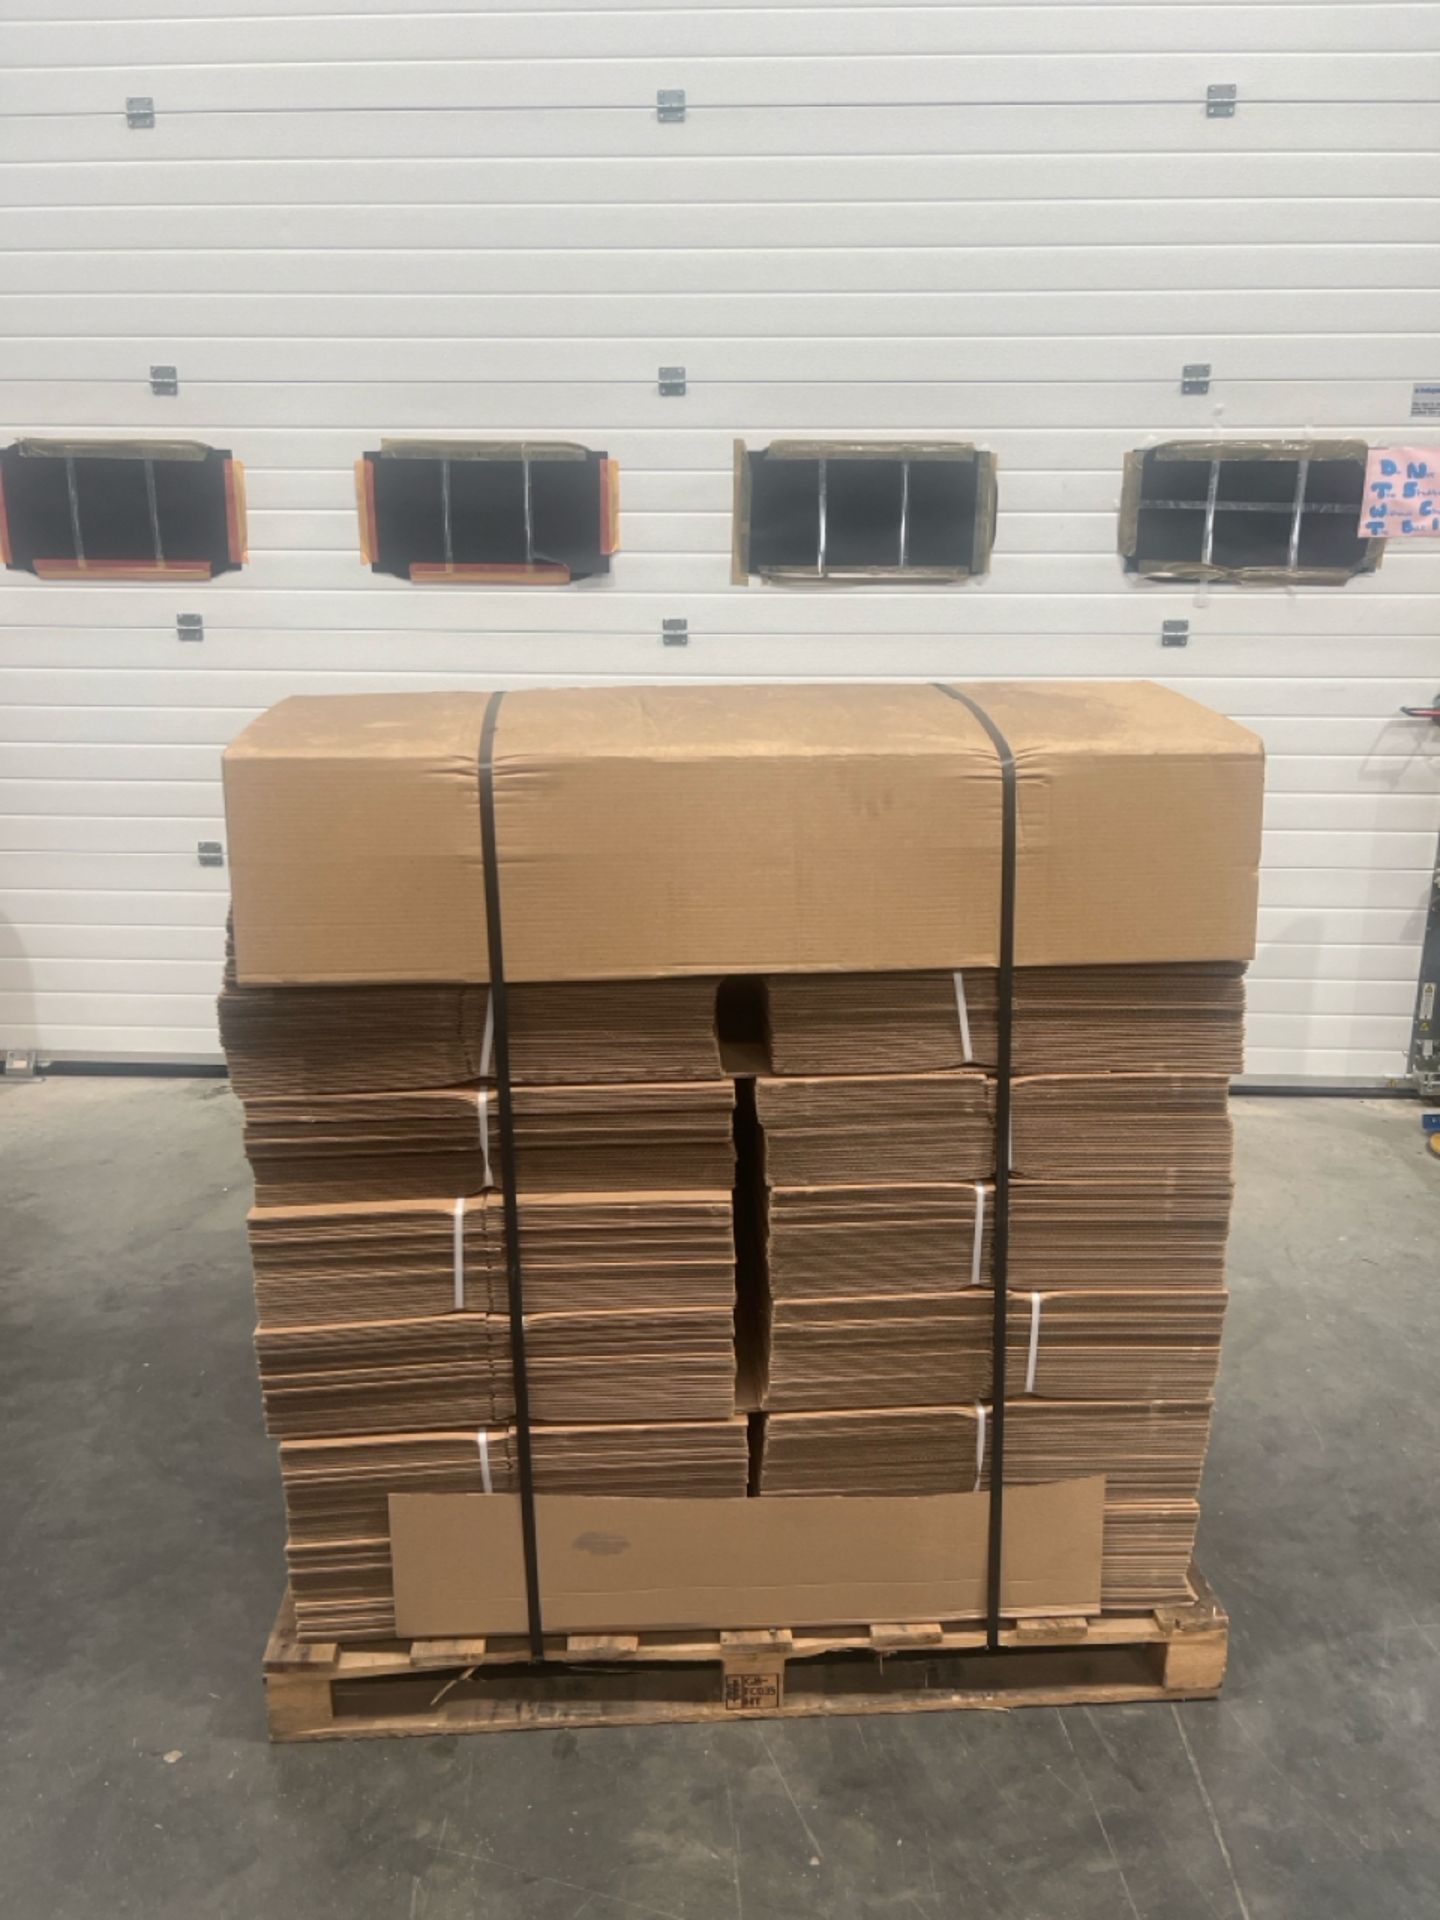 Cardboard Flat Pack boxes x 772 - 29cm x 27cm x 9cm - Image 2 of 3